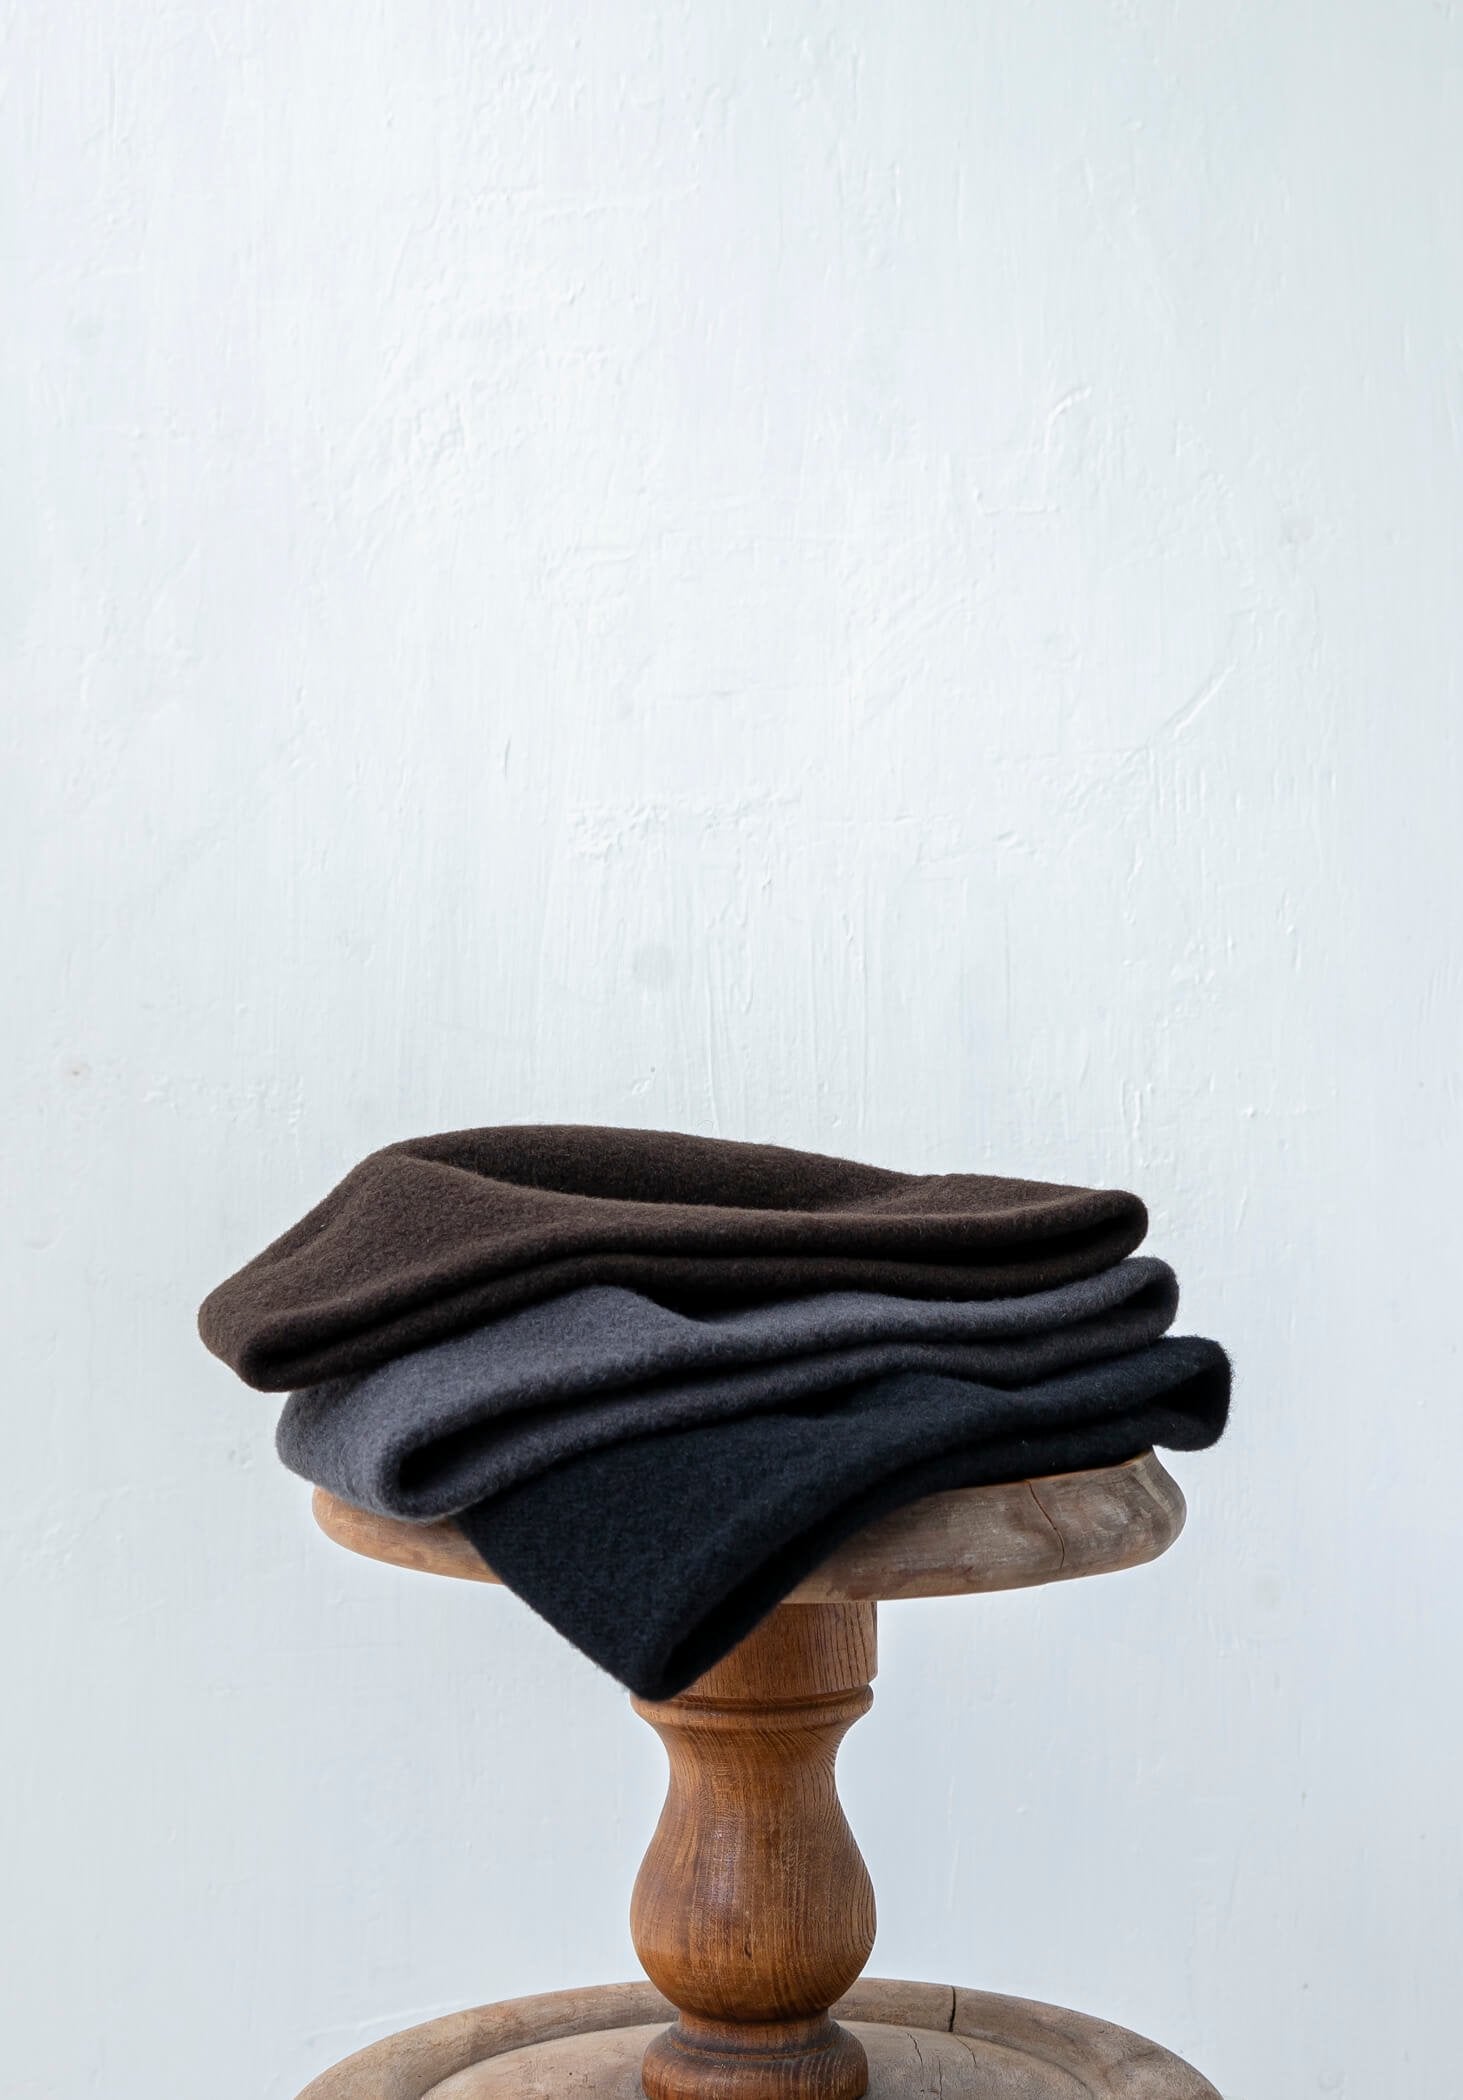 SCHA / "Art#934" Wool Watch cap / dark grey